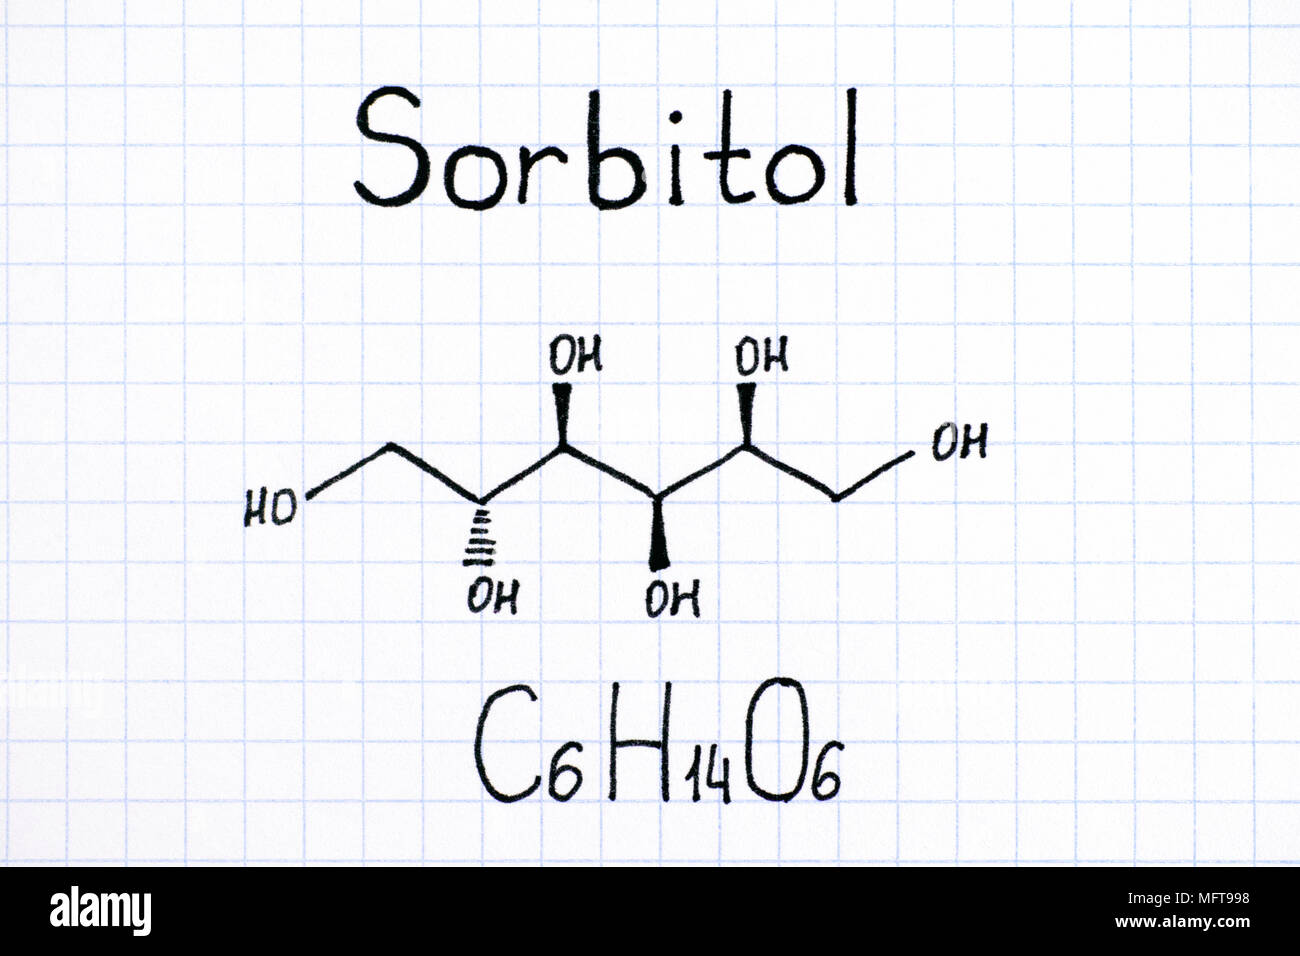 Formula chimica del sorbitolo. Close-up. Foto Stock